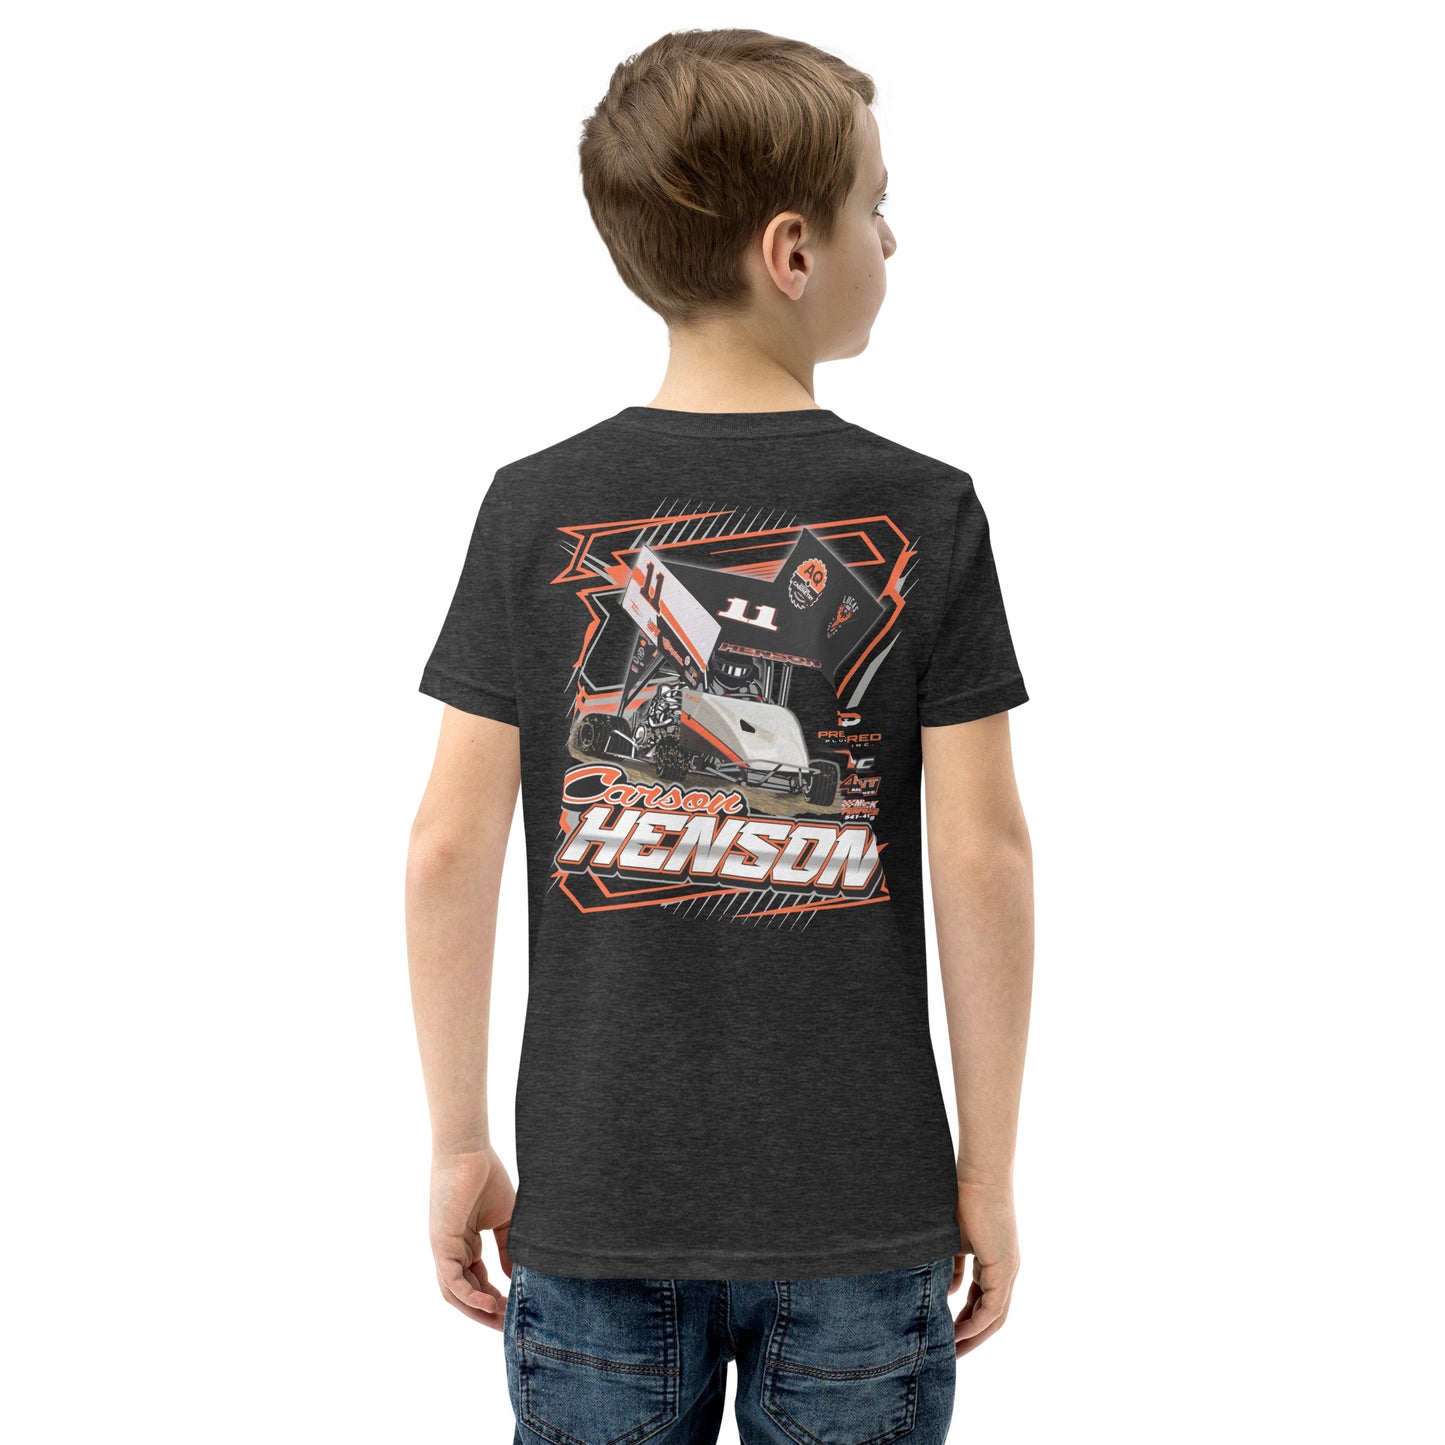 Carson Henson Kids T-Shirt